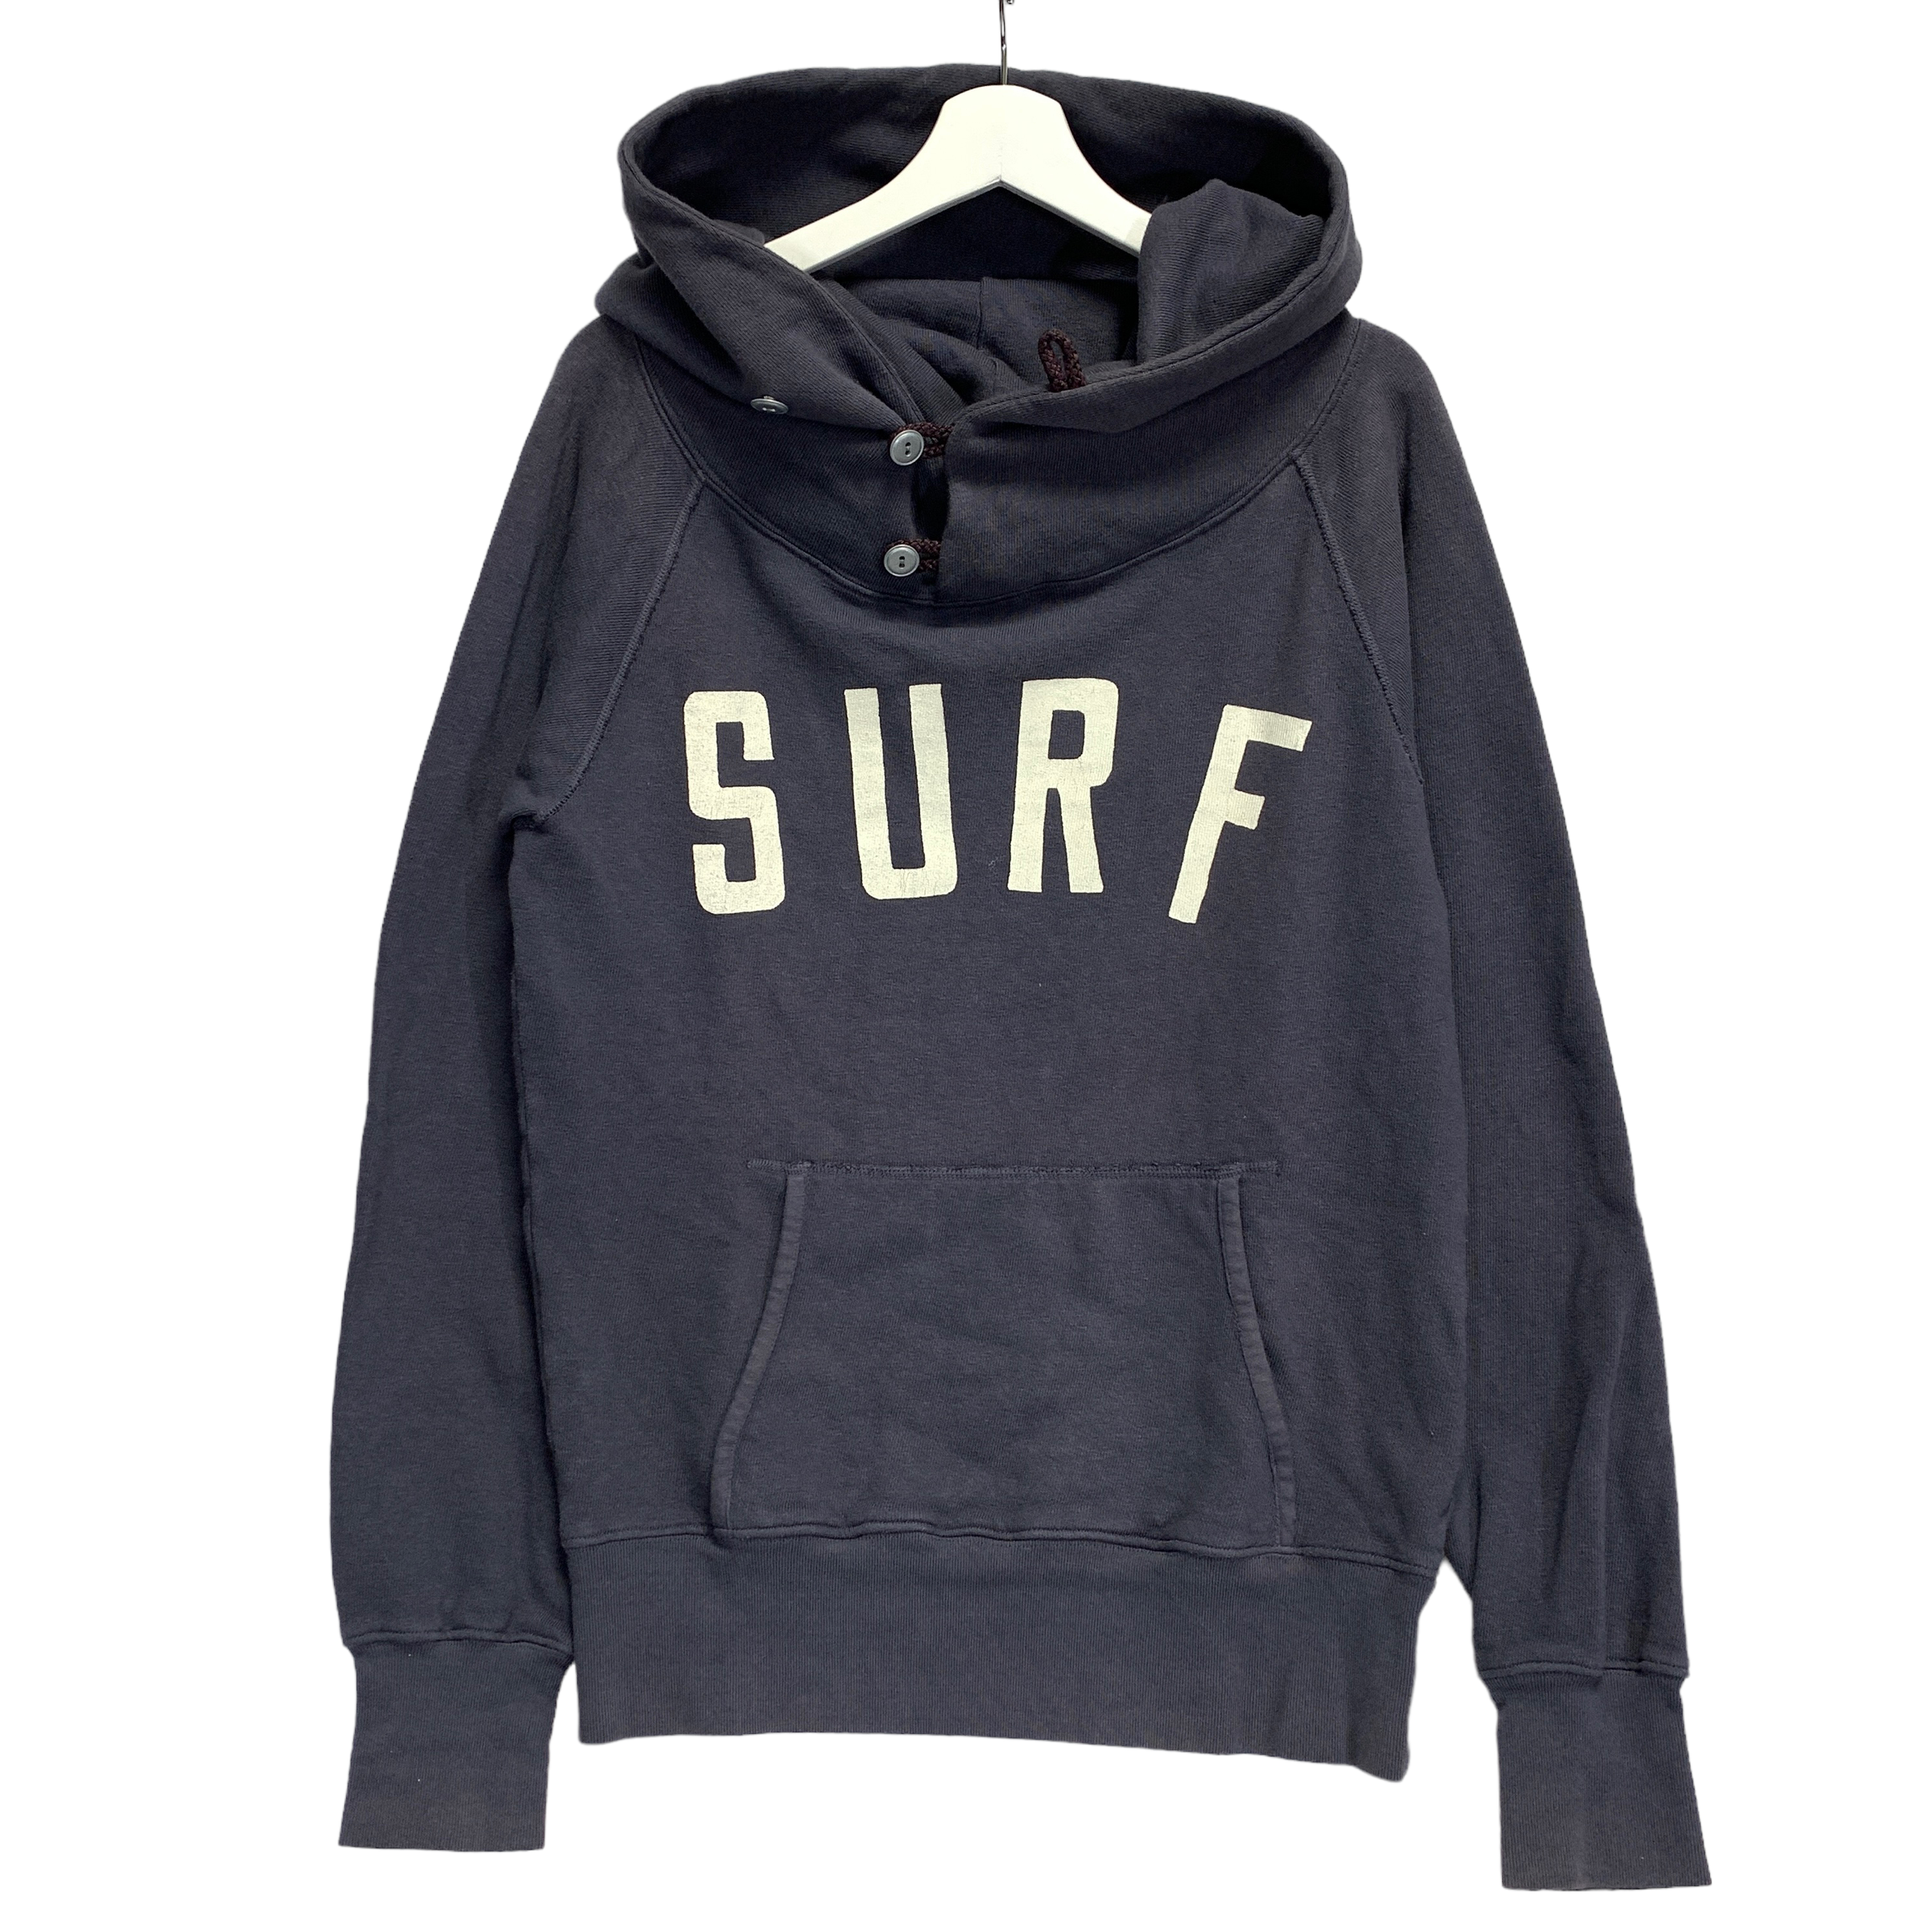 L] Kapital Surf Pullover Hoodie Grey – StylisticsJapan.com